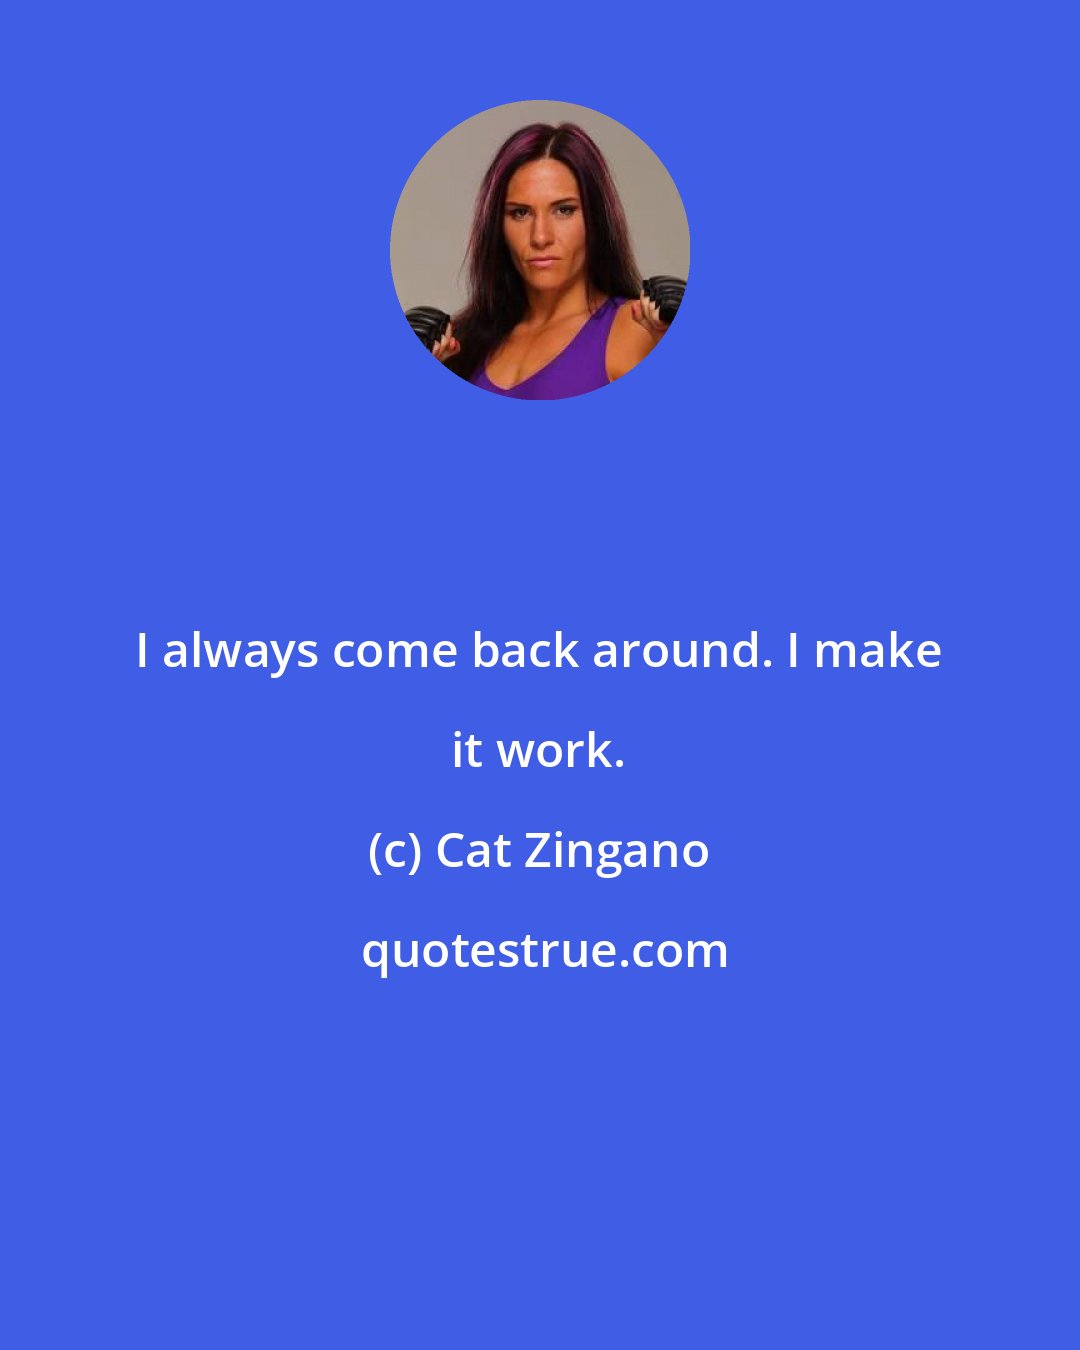 Cat Zingano: I always come back around. I make it work.